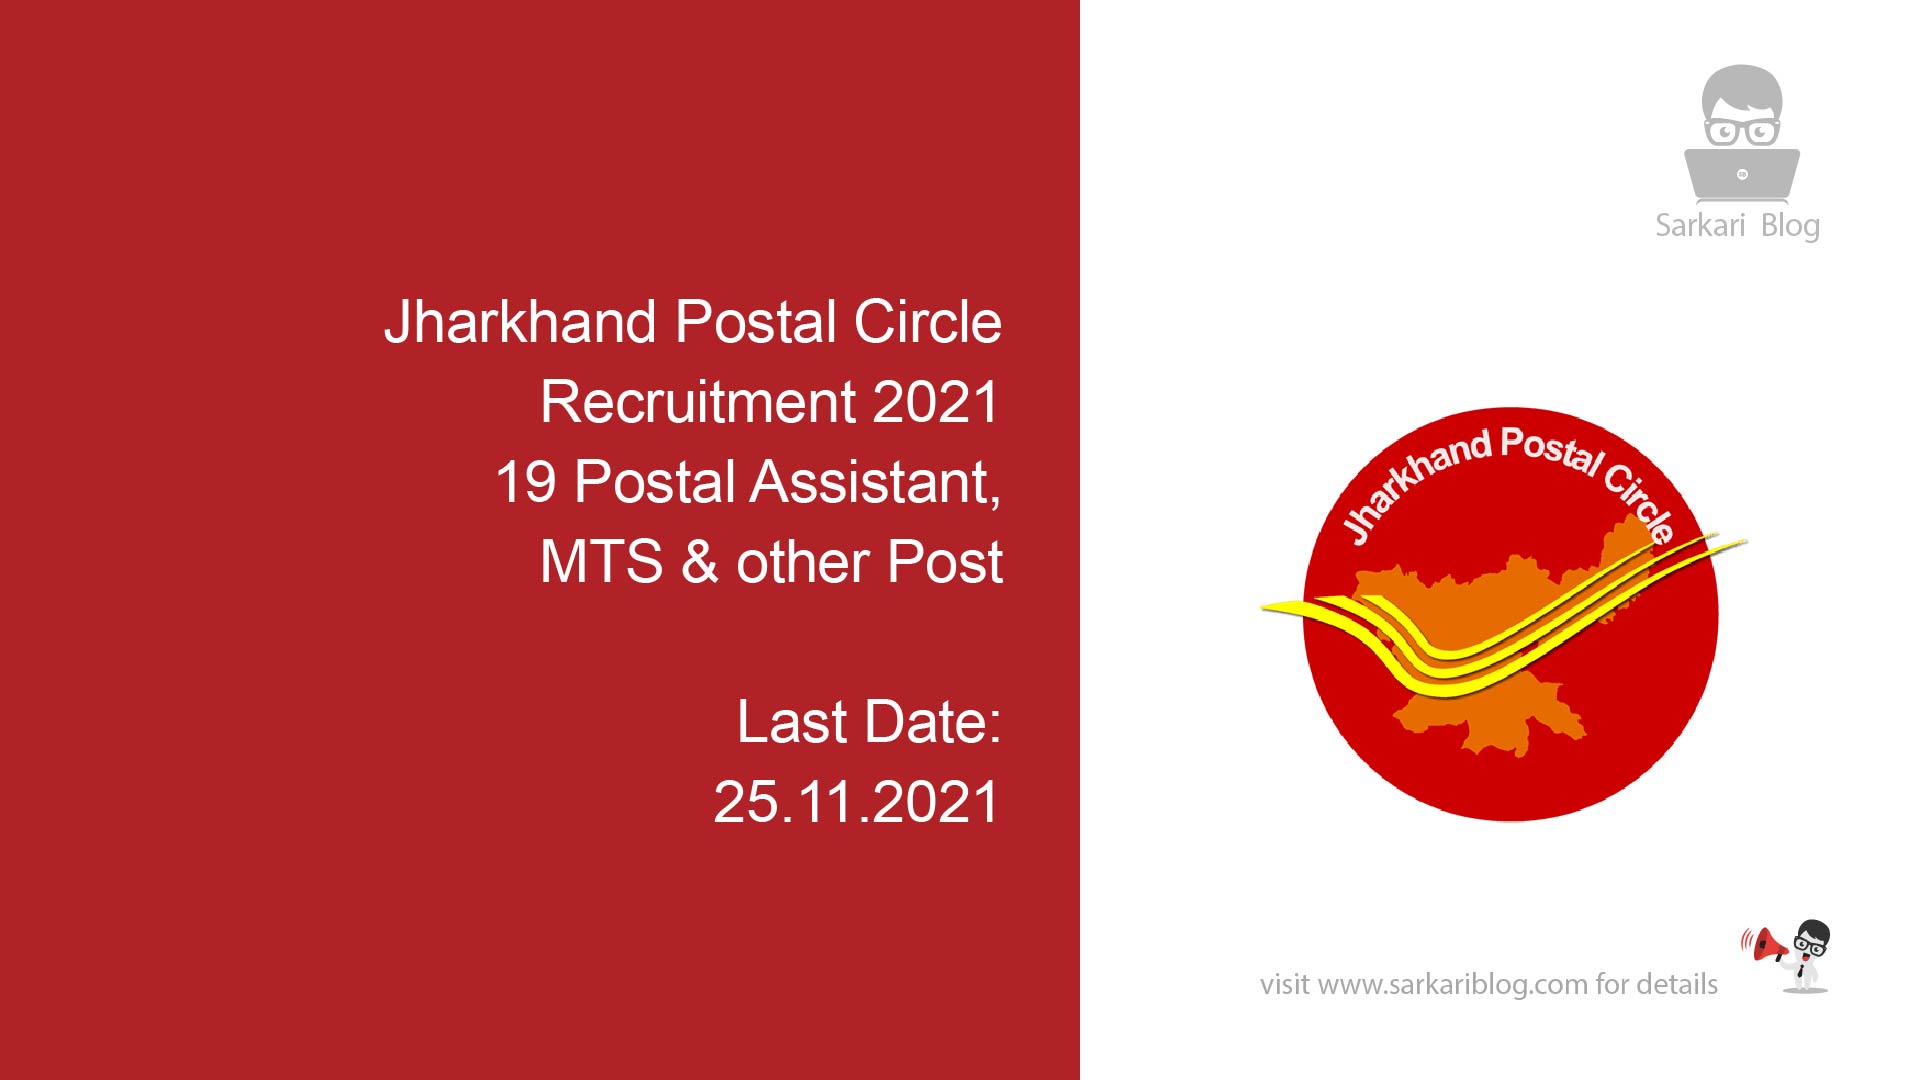 Jharkhand Postal Circle Recruitment 2021